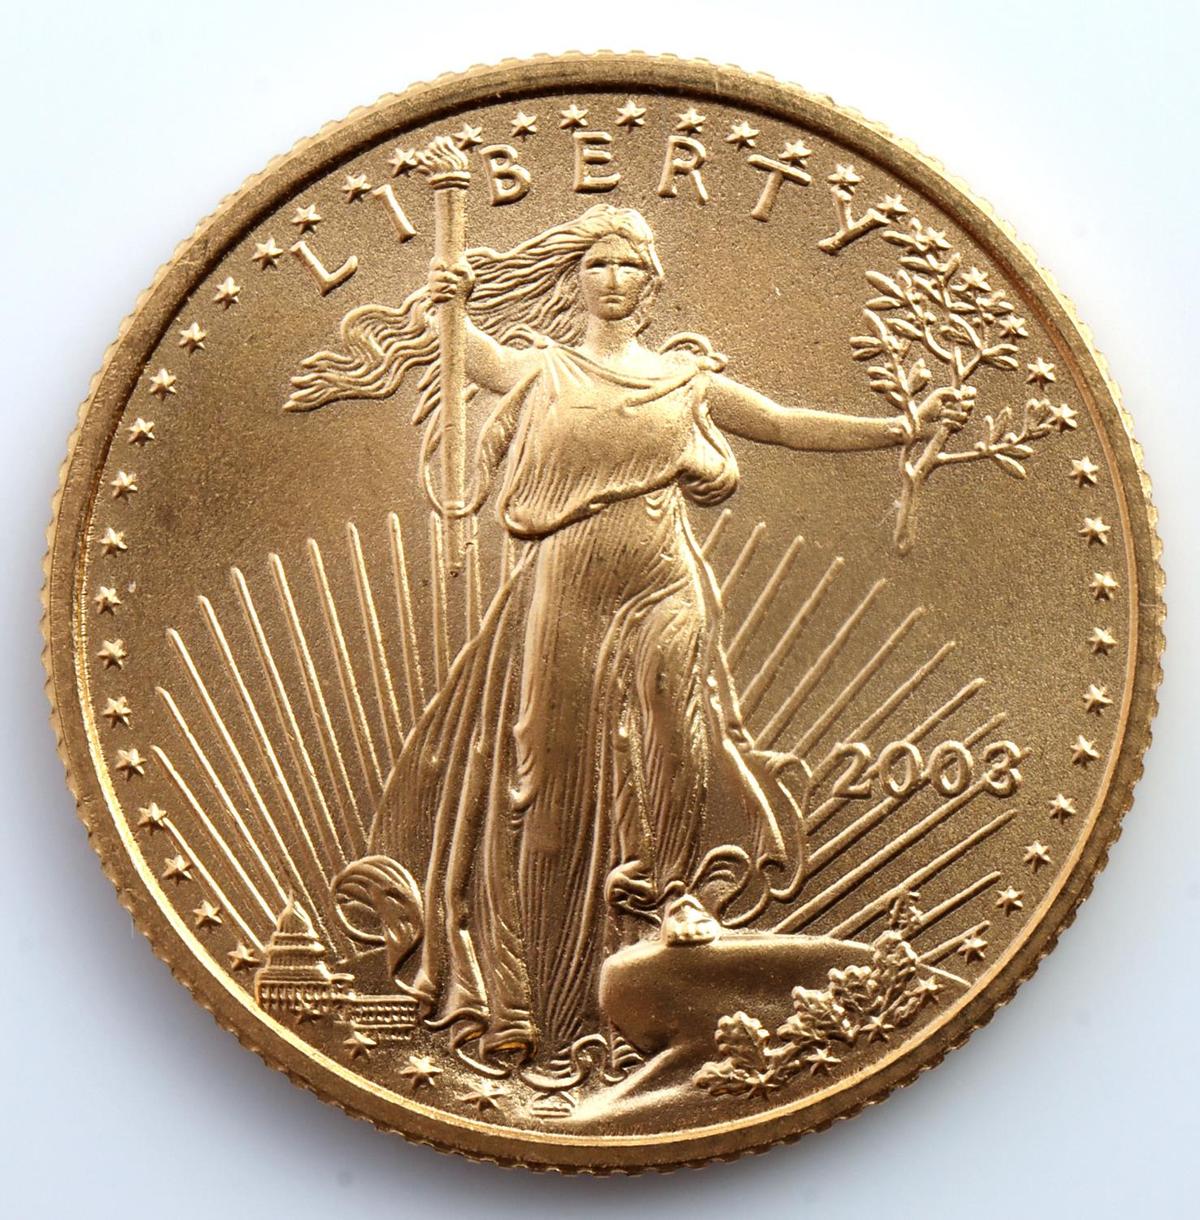 AMERICAN GOLD EAGLE 1/4 OZ GOLD COIN 2003